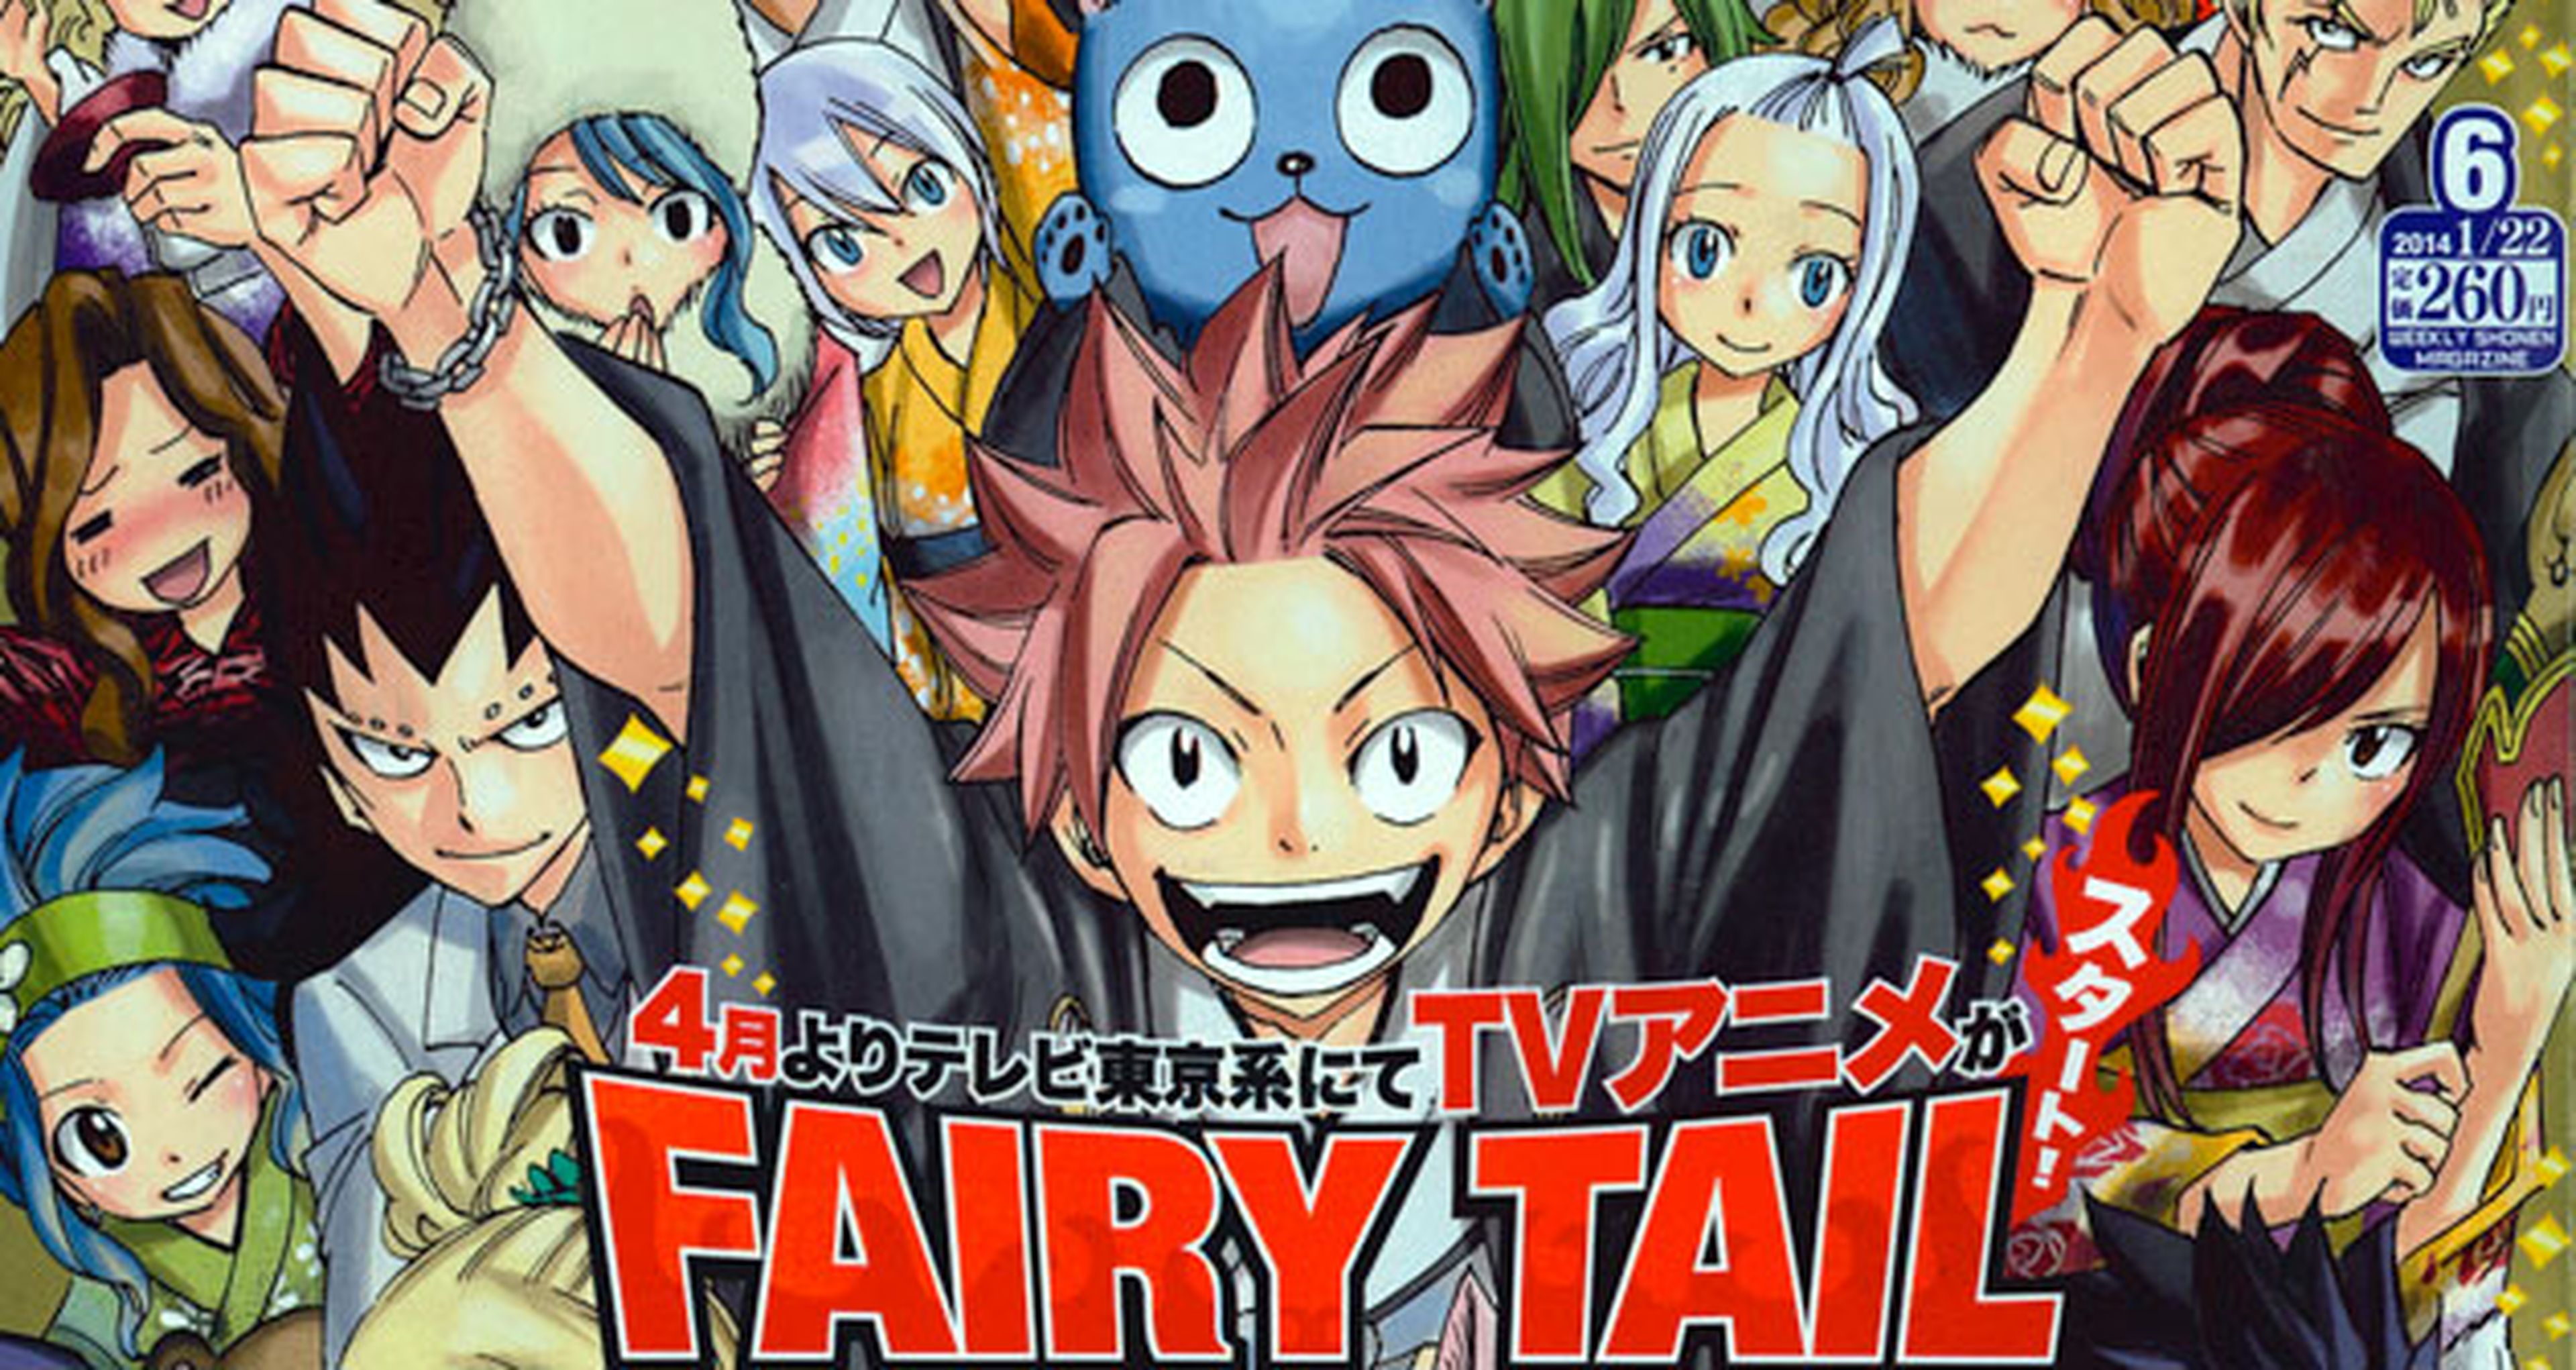 Nace la revista Monthly Fairy Tail